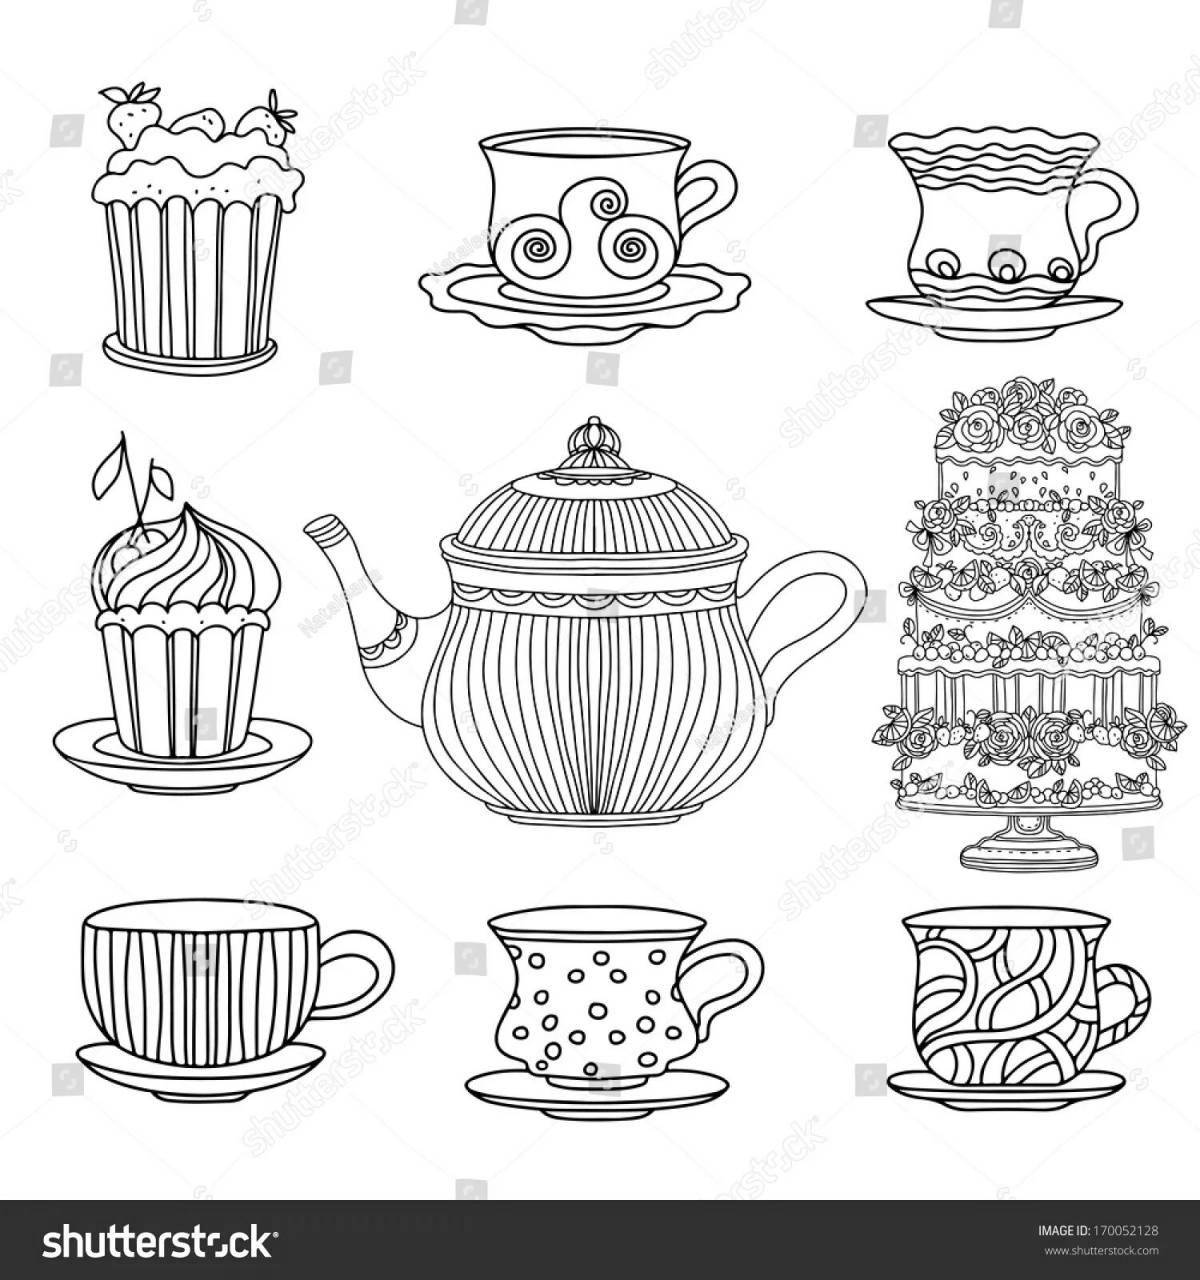 Tea set coloring page